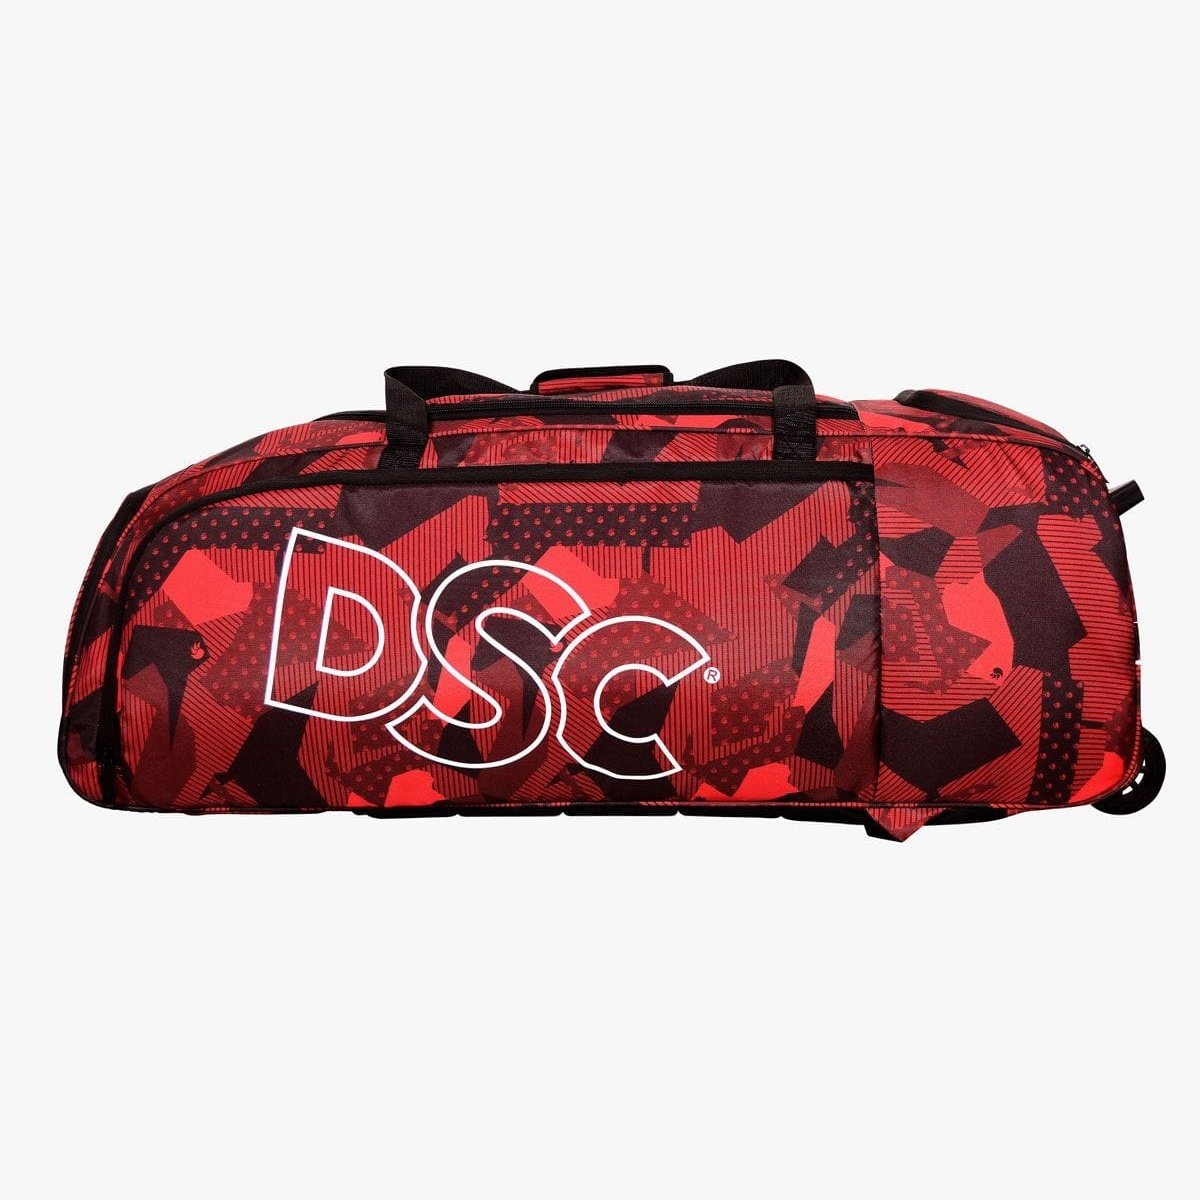 Adidas WicketKeeping DSC Rebel Pro Duffle with Wheels Cricket Bag